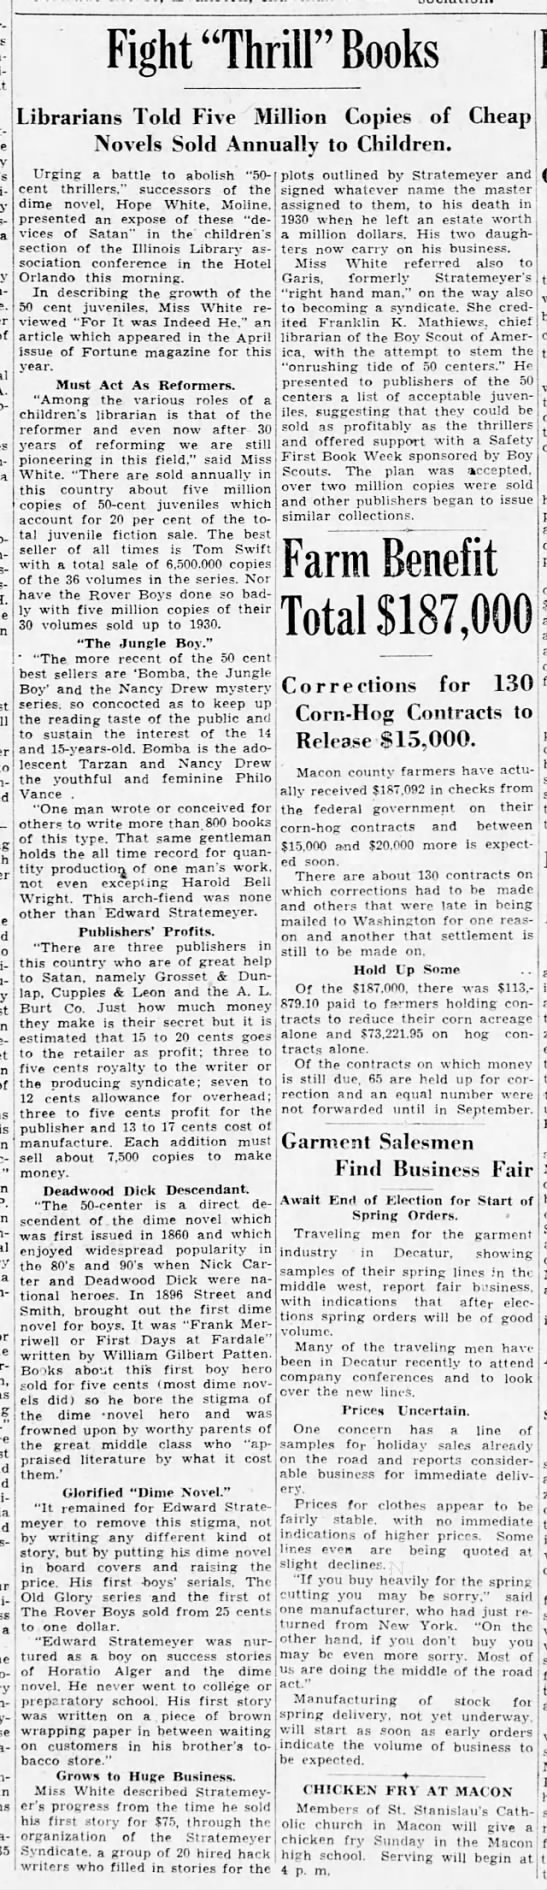 Librarian is against "50-cent" juvenile books like Nancy Drew, 1934 - 